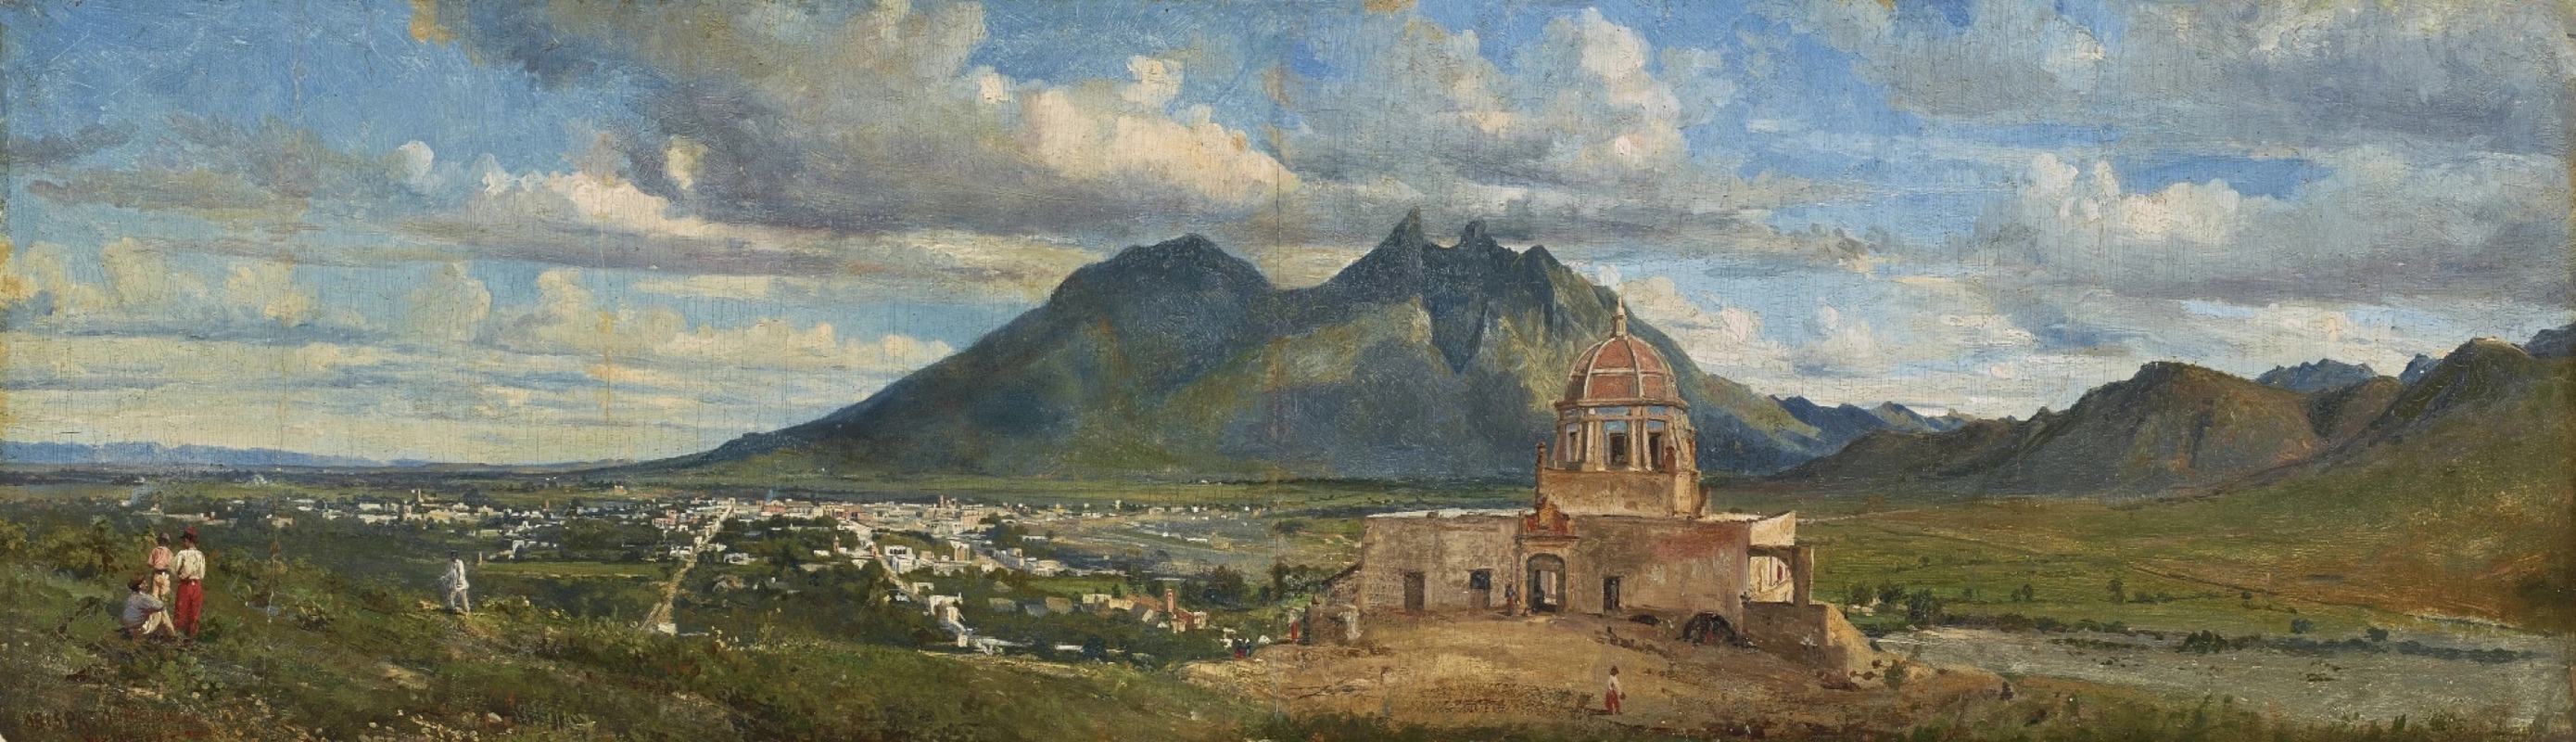 Conrad Wise Chapman - View of Bishop’s Palace Near Monterrey